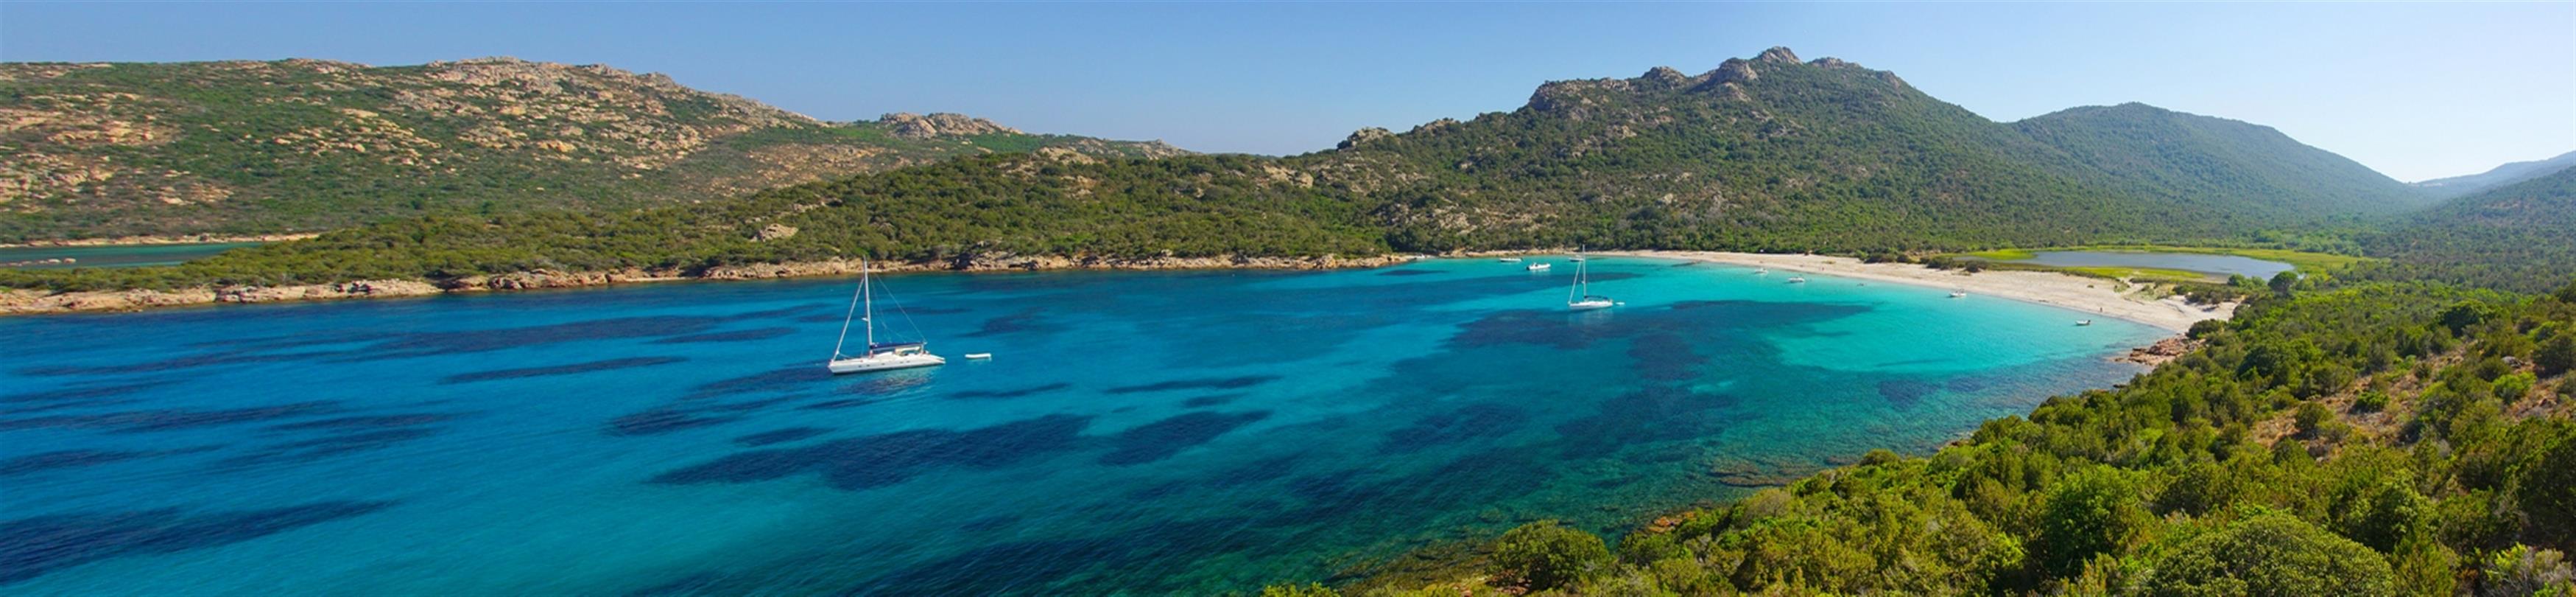 Porto Novo strand in het zuiden van Corsica - Domaine de Bagheera, naturisme Corsica